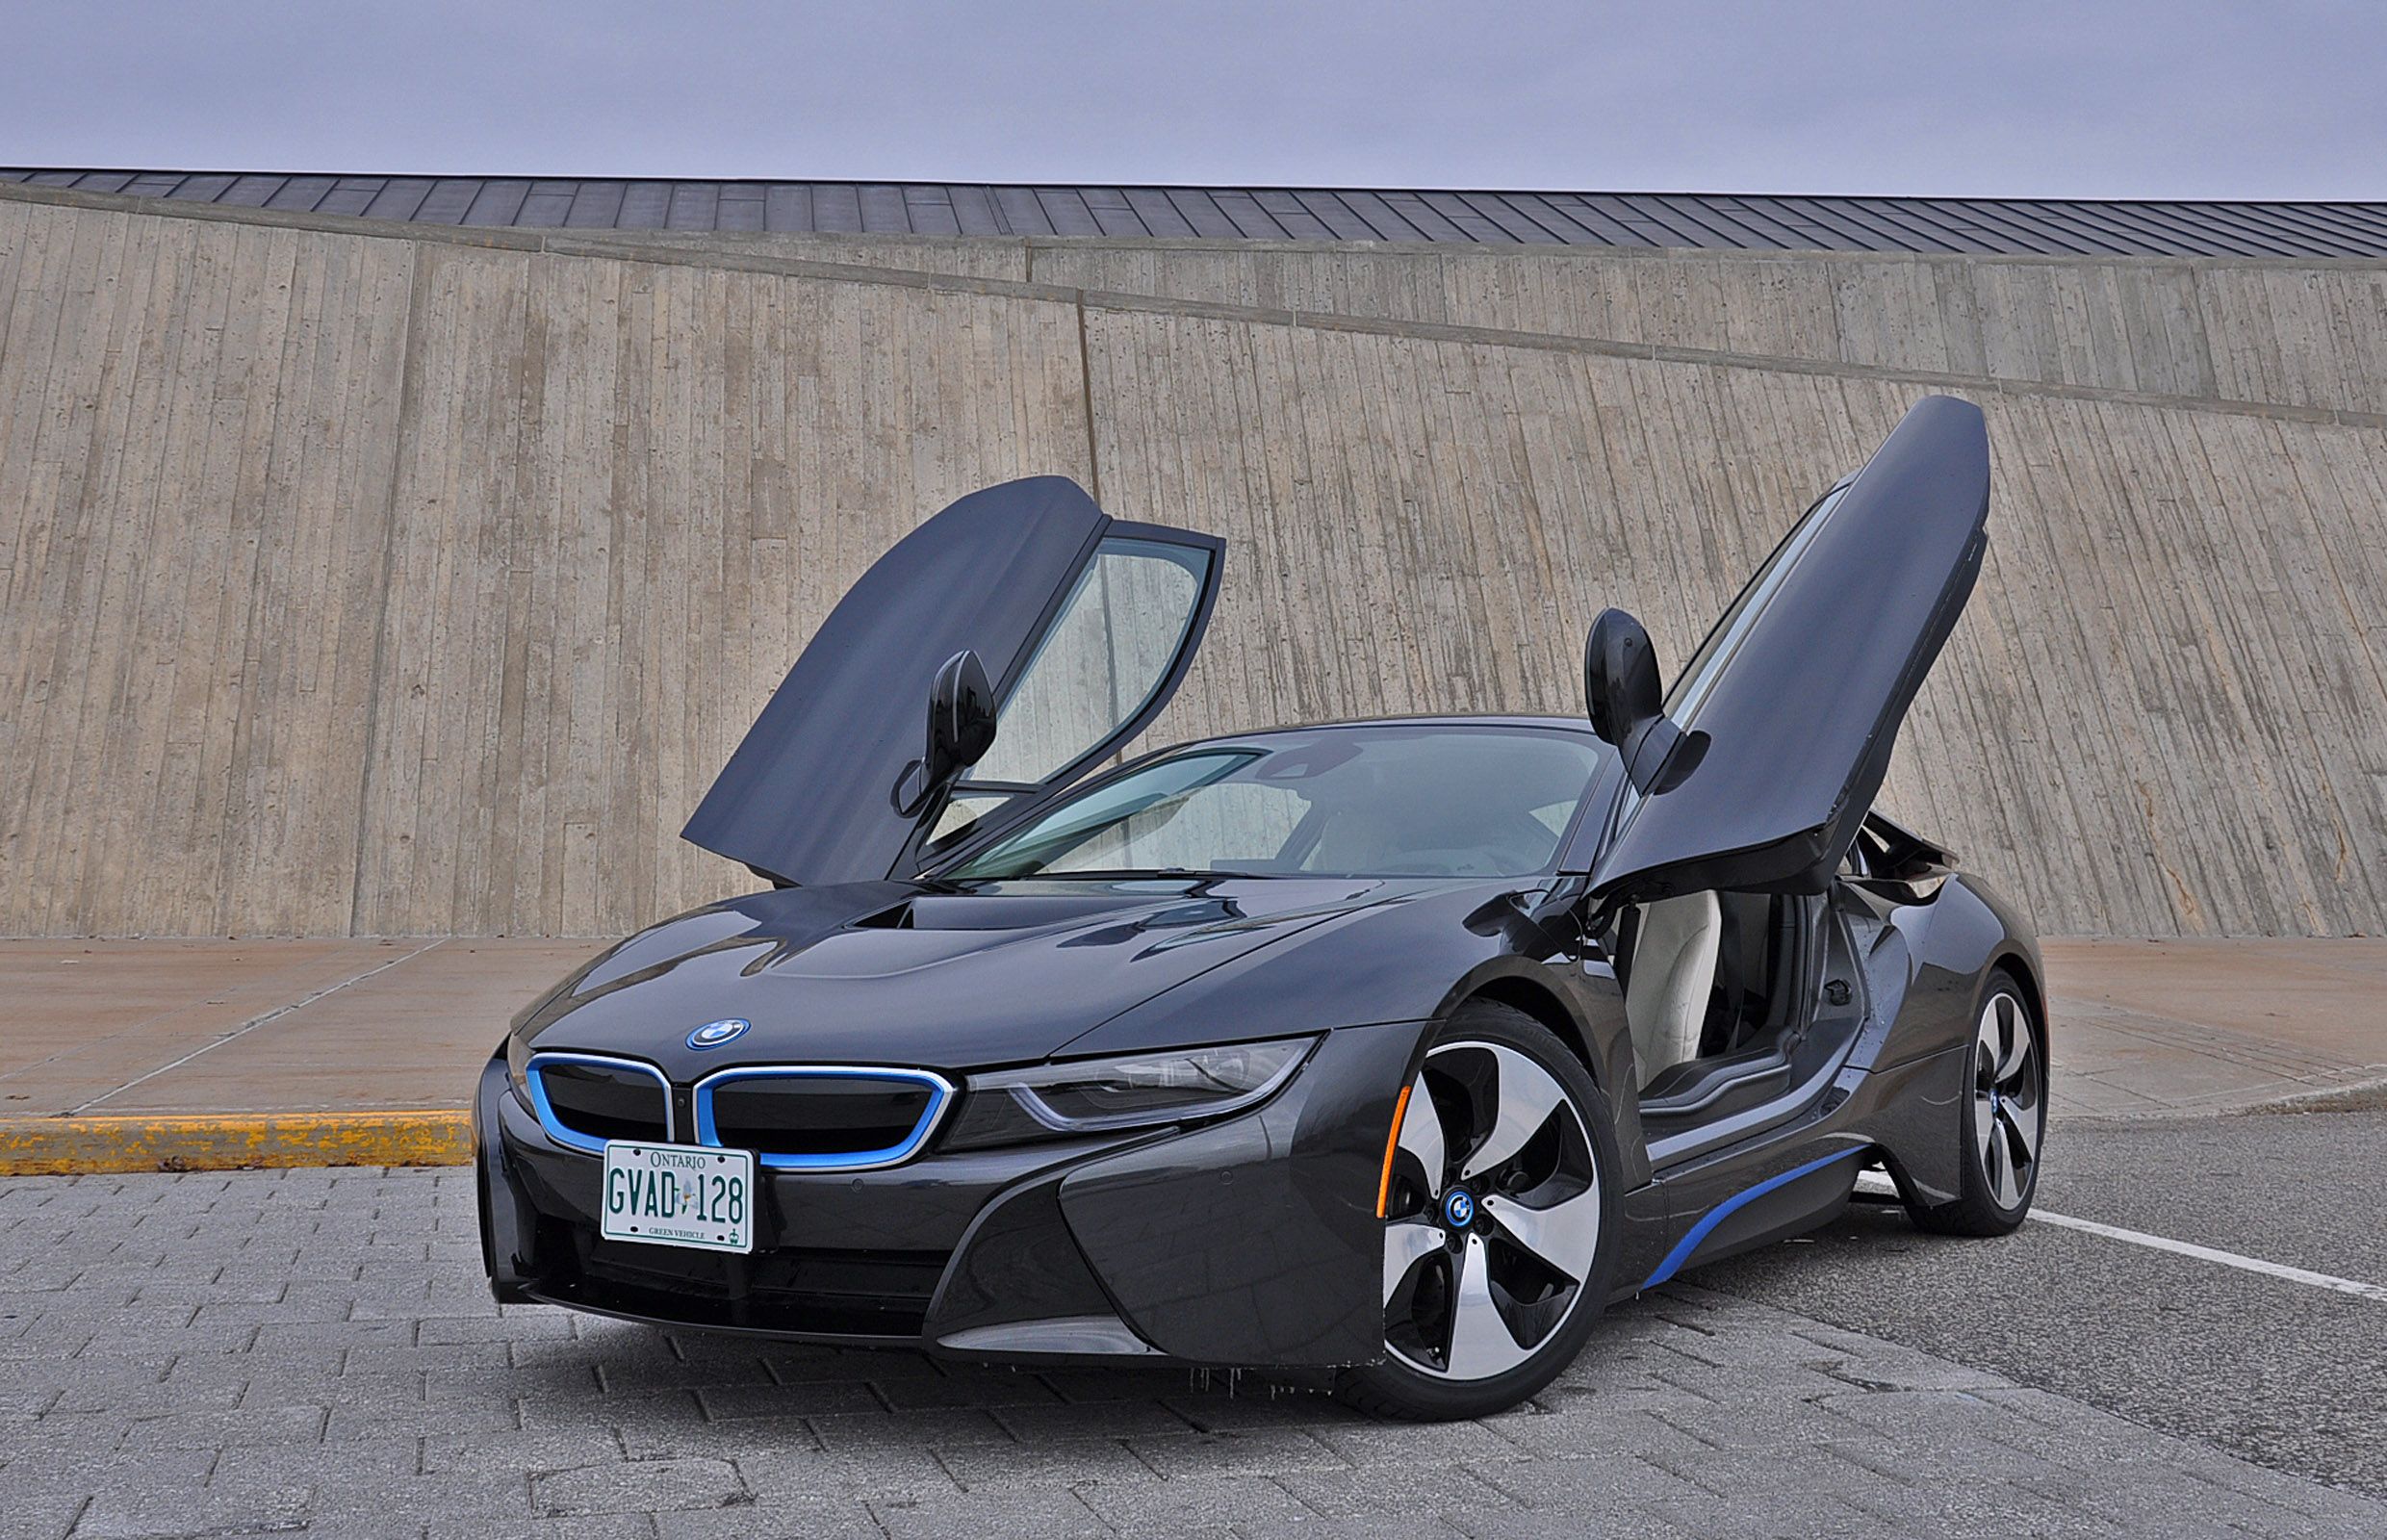 Supercar Review: 2015 BMW i8